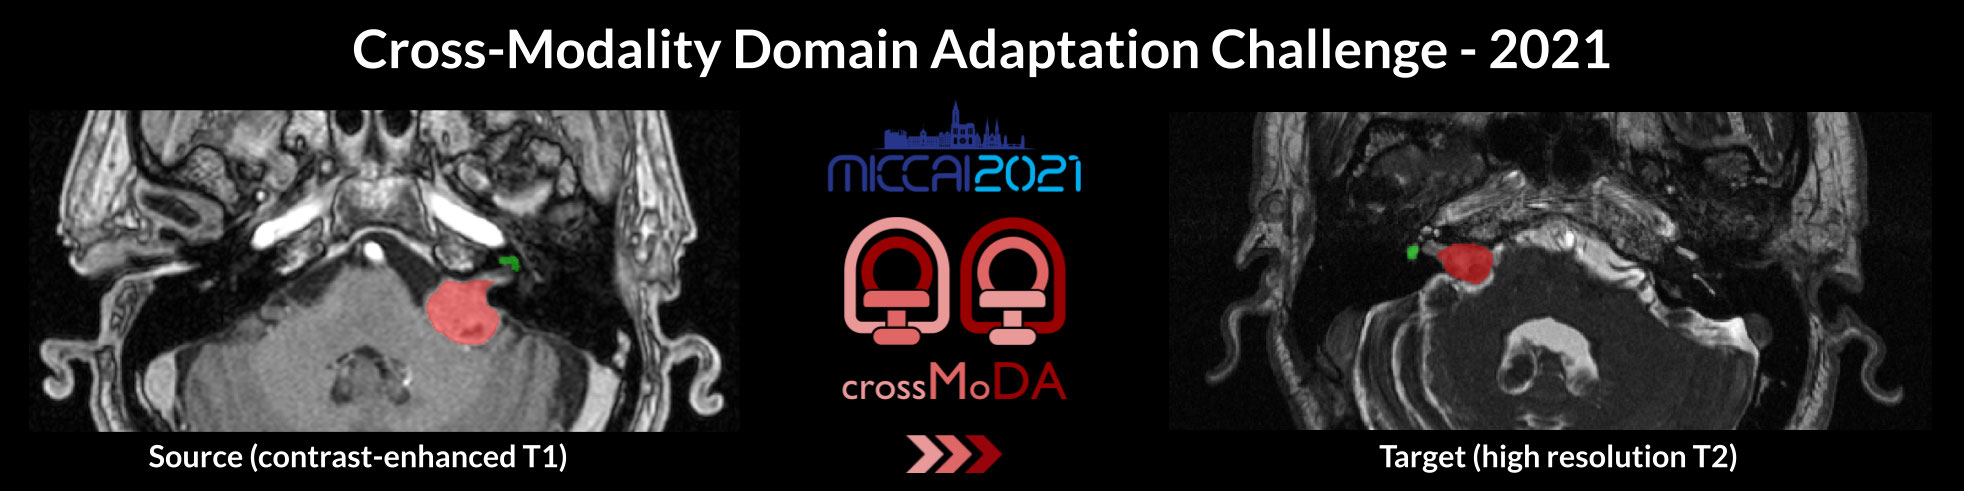 Cross-Modality Domain Adaptation for Medical Image Segmentation Banner